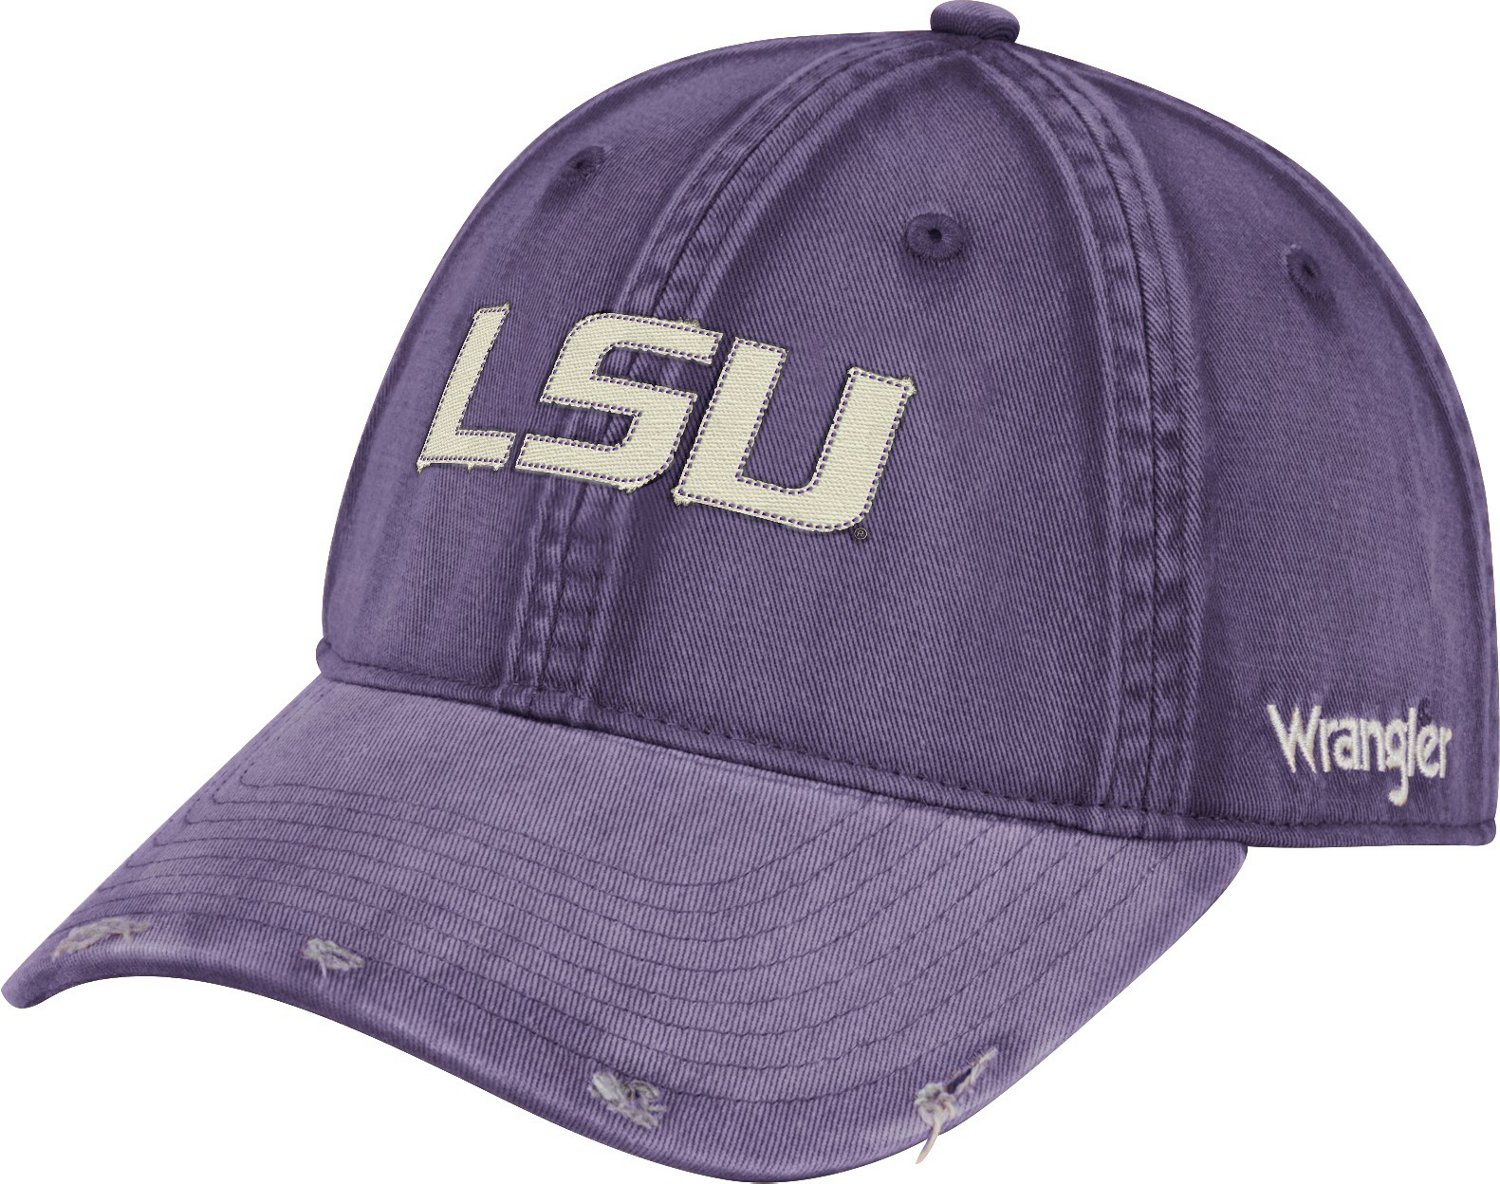 LSU Louisiana State University Tigers Cap Hat PUMA Vintage Retro Purple